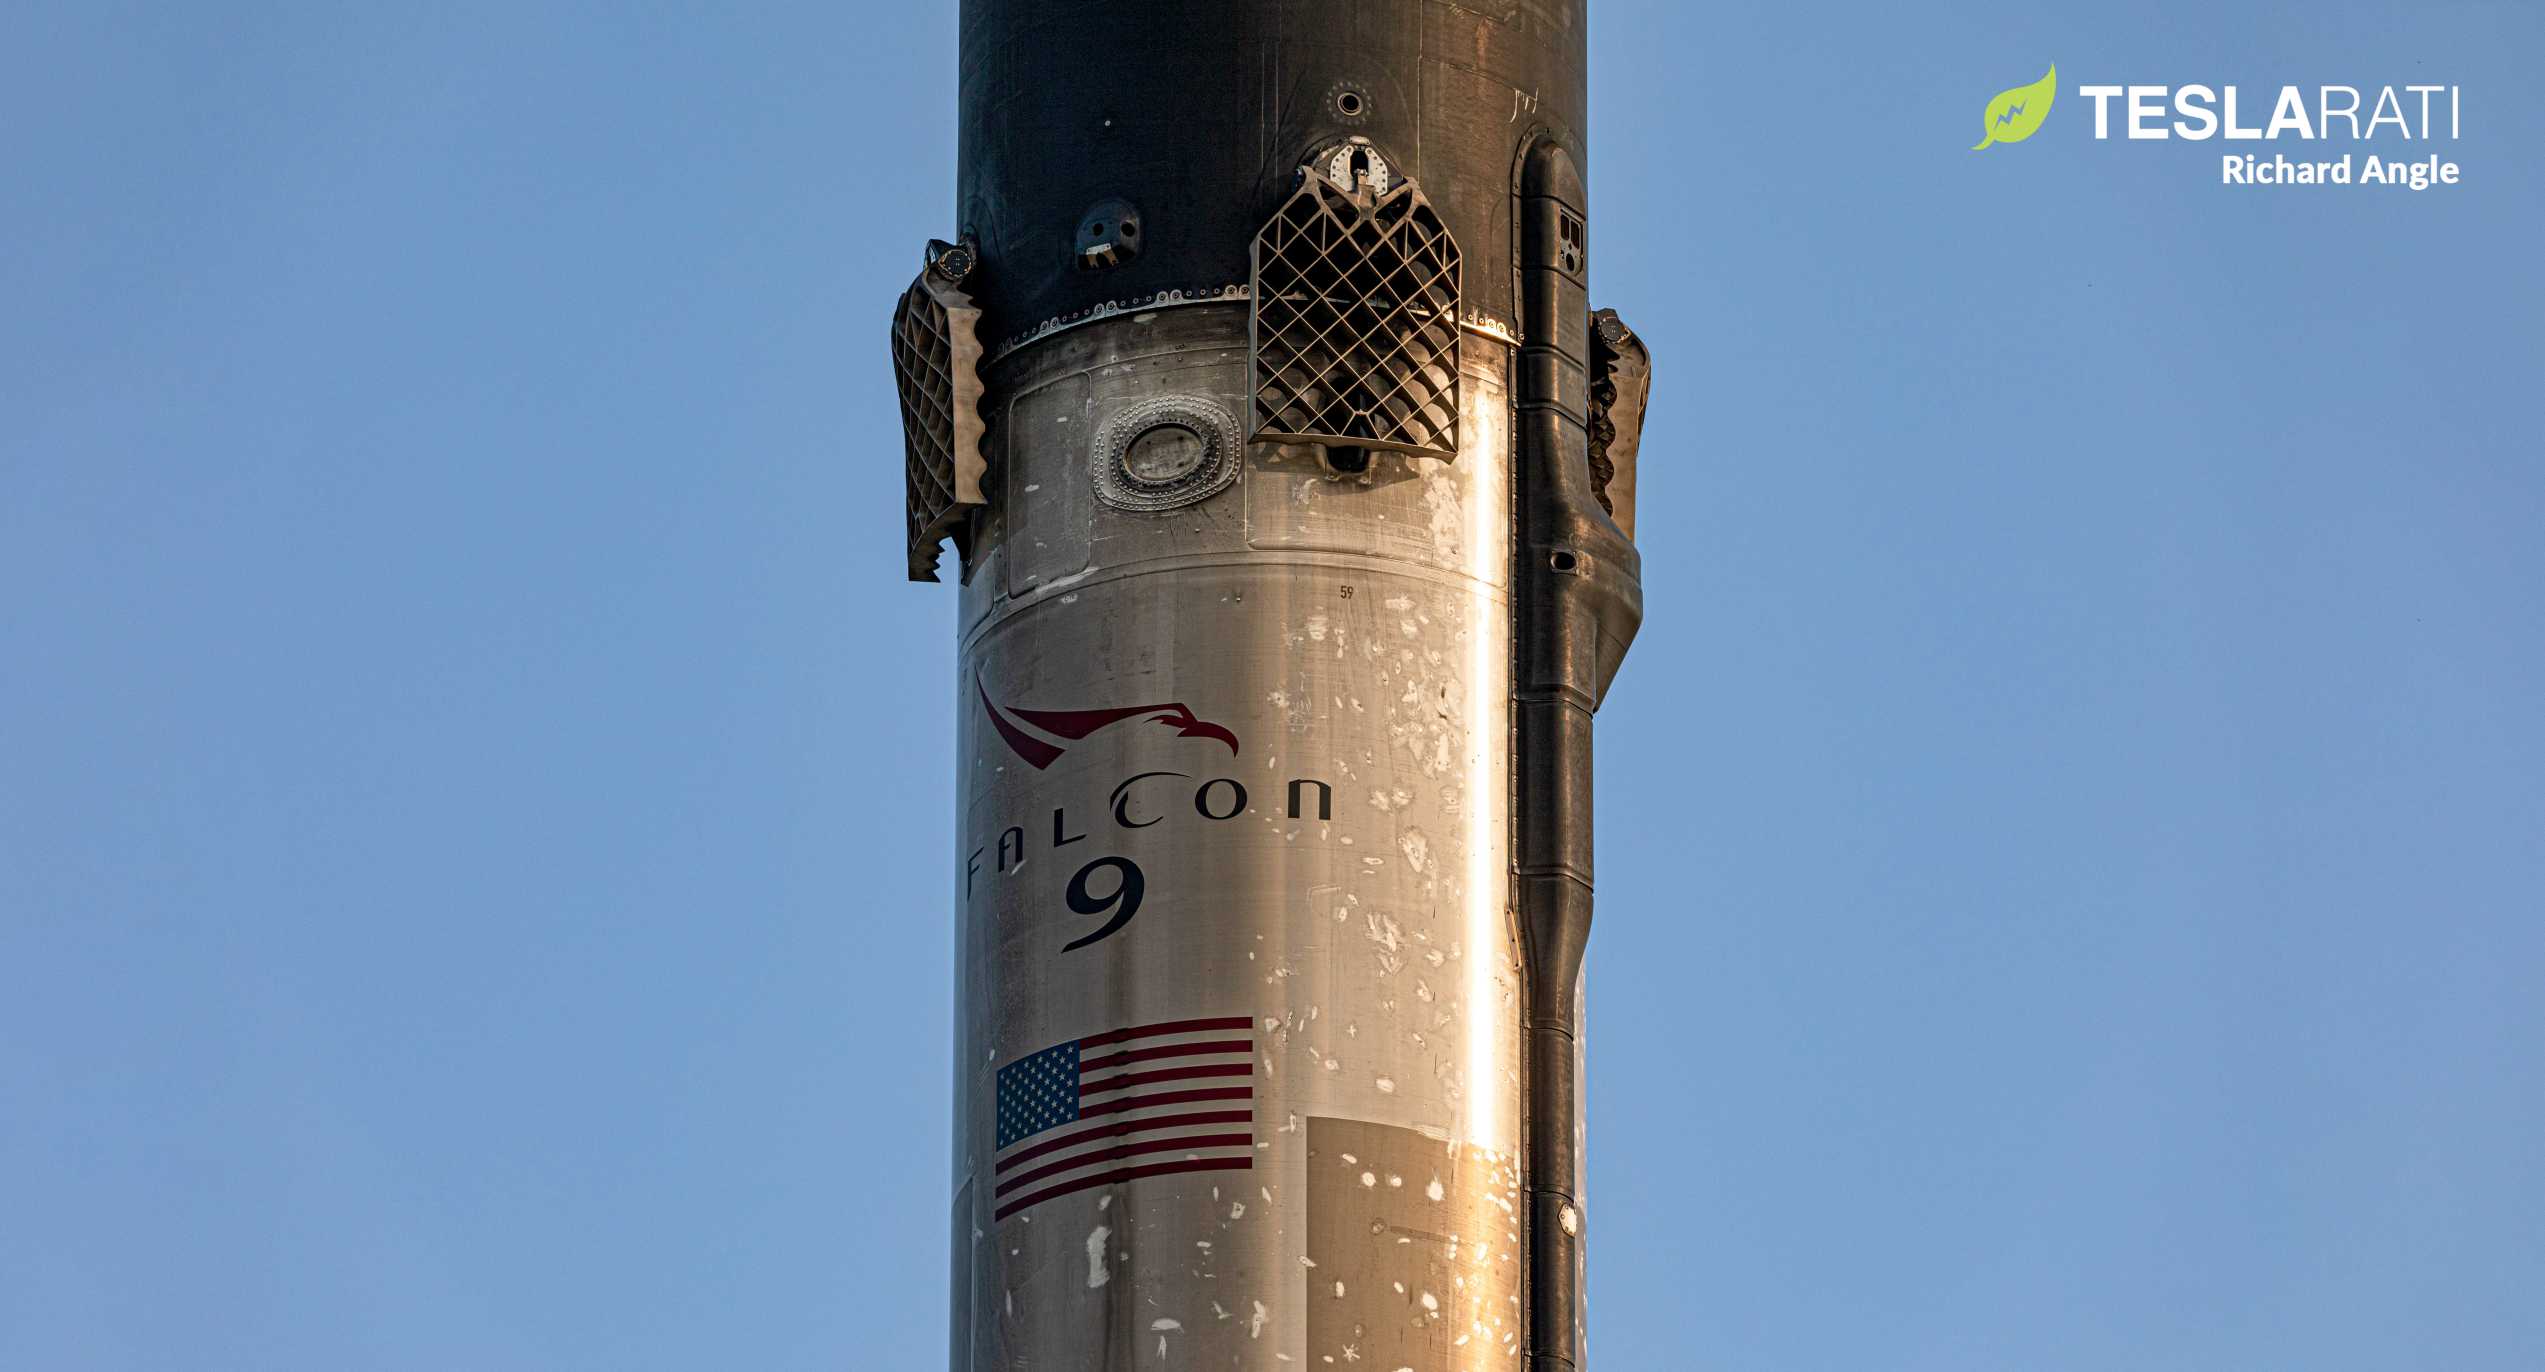 Starlink-8 Falcon 9 B1059 OCISLY return 061620 (Richard Angle) (7) (c)